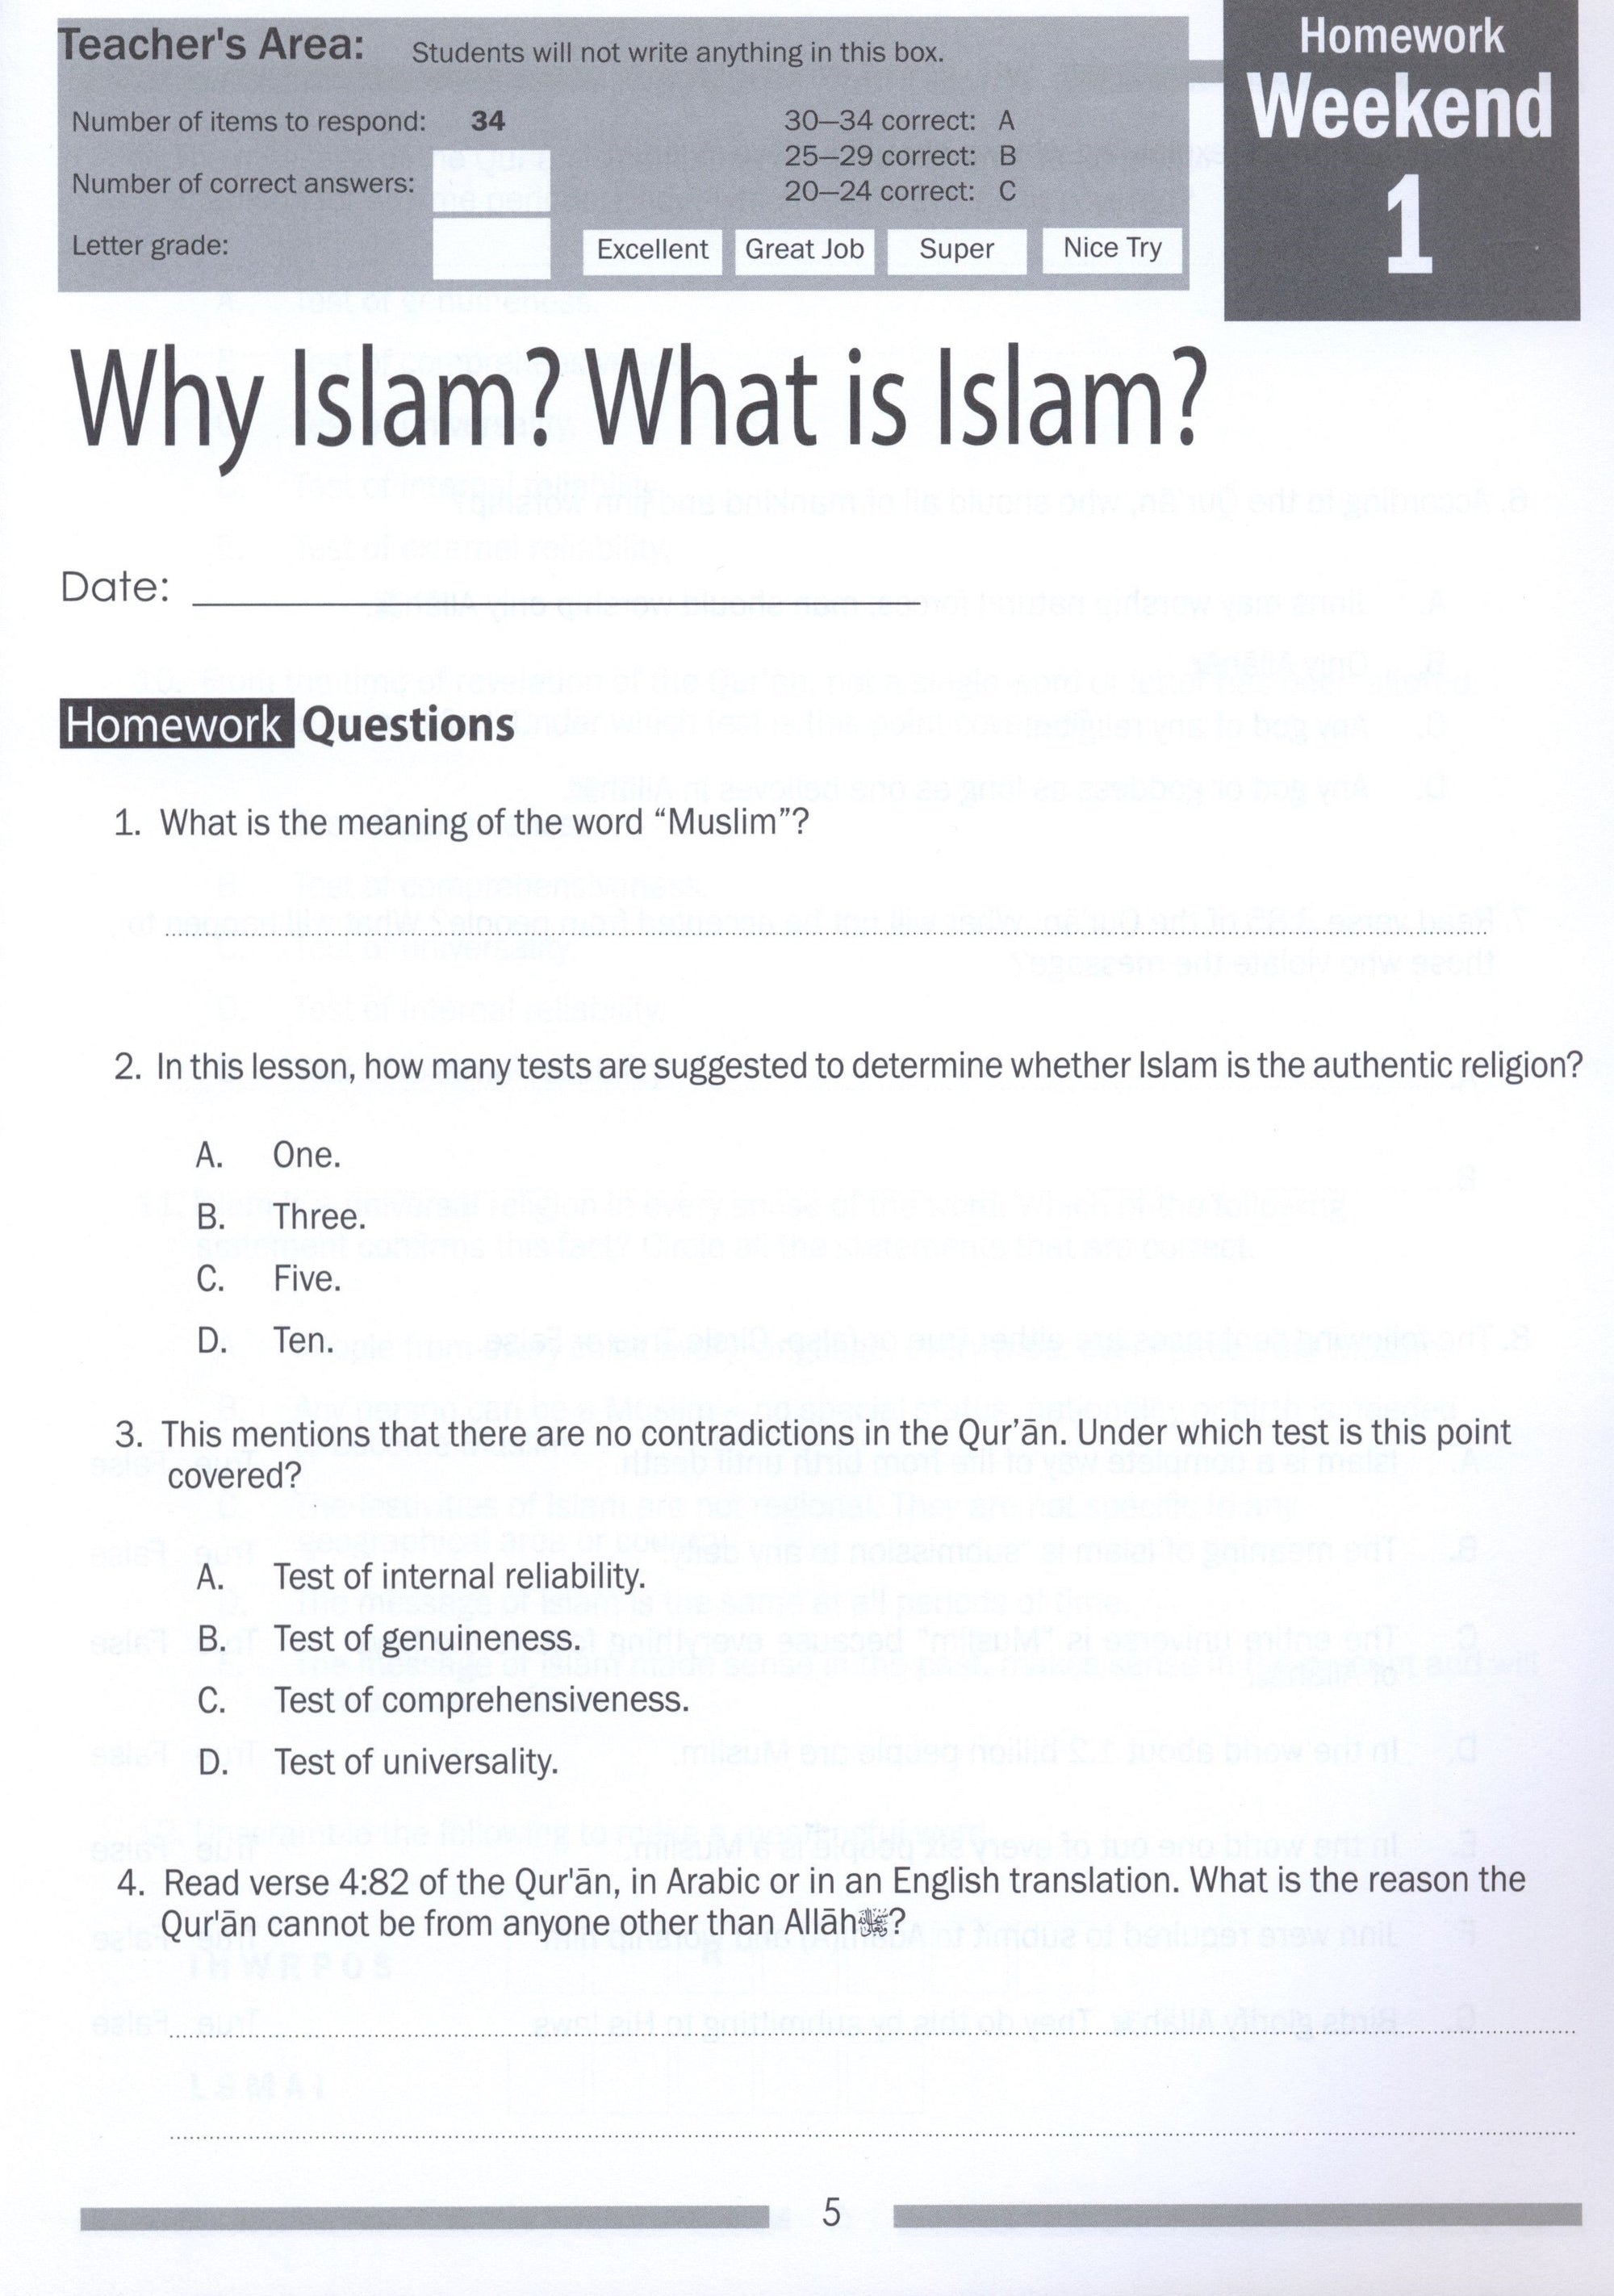 Weekend Learning Islamic Studies Workbook Level 7